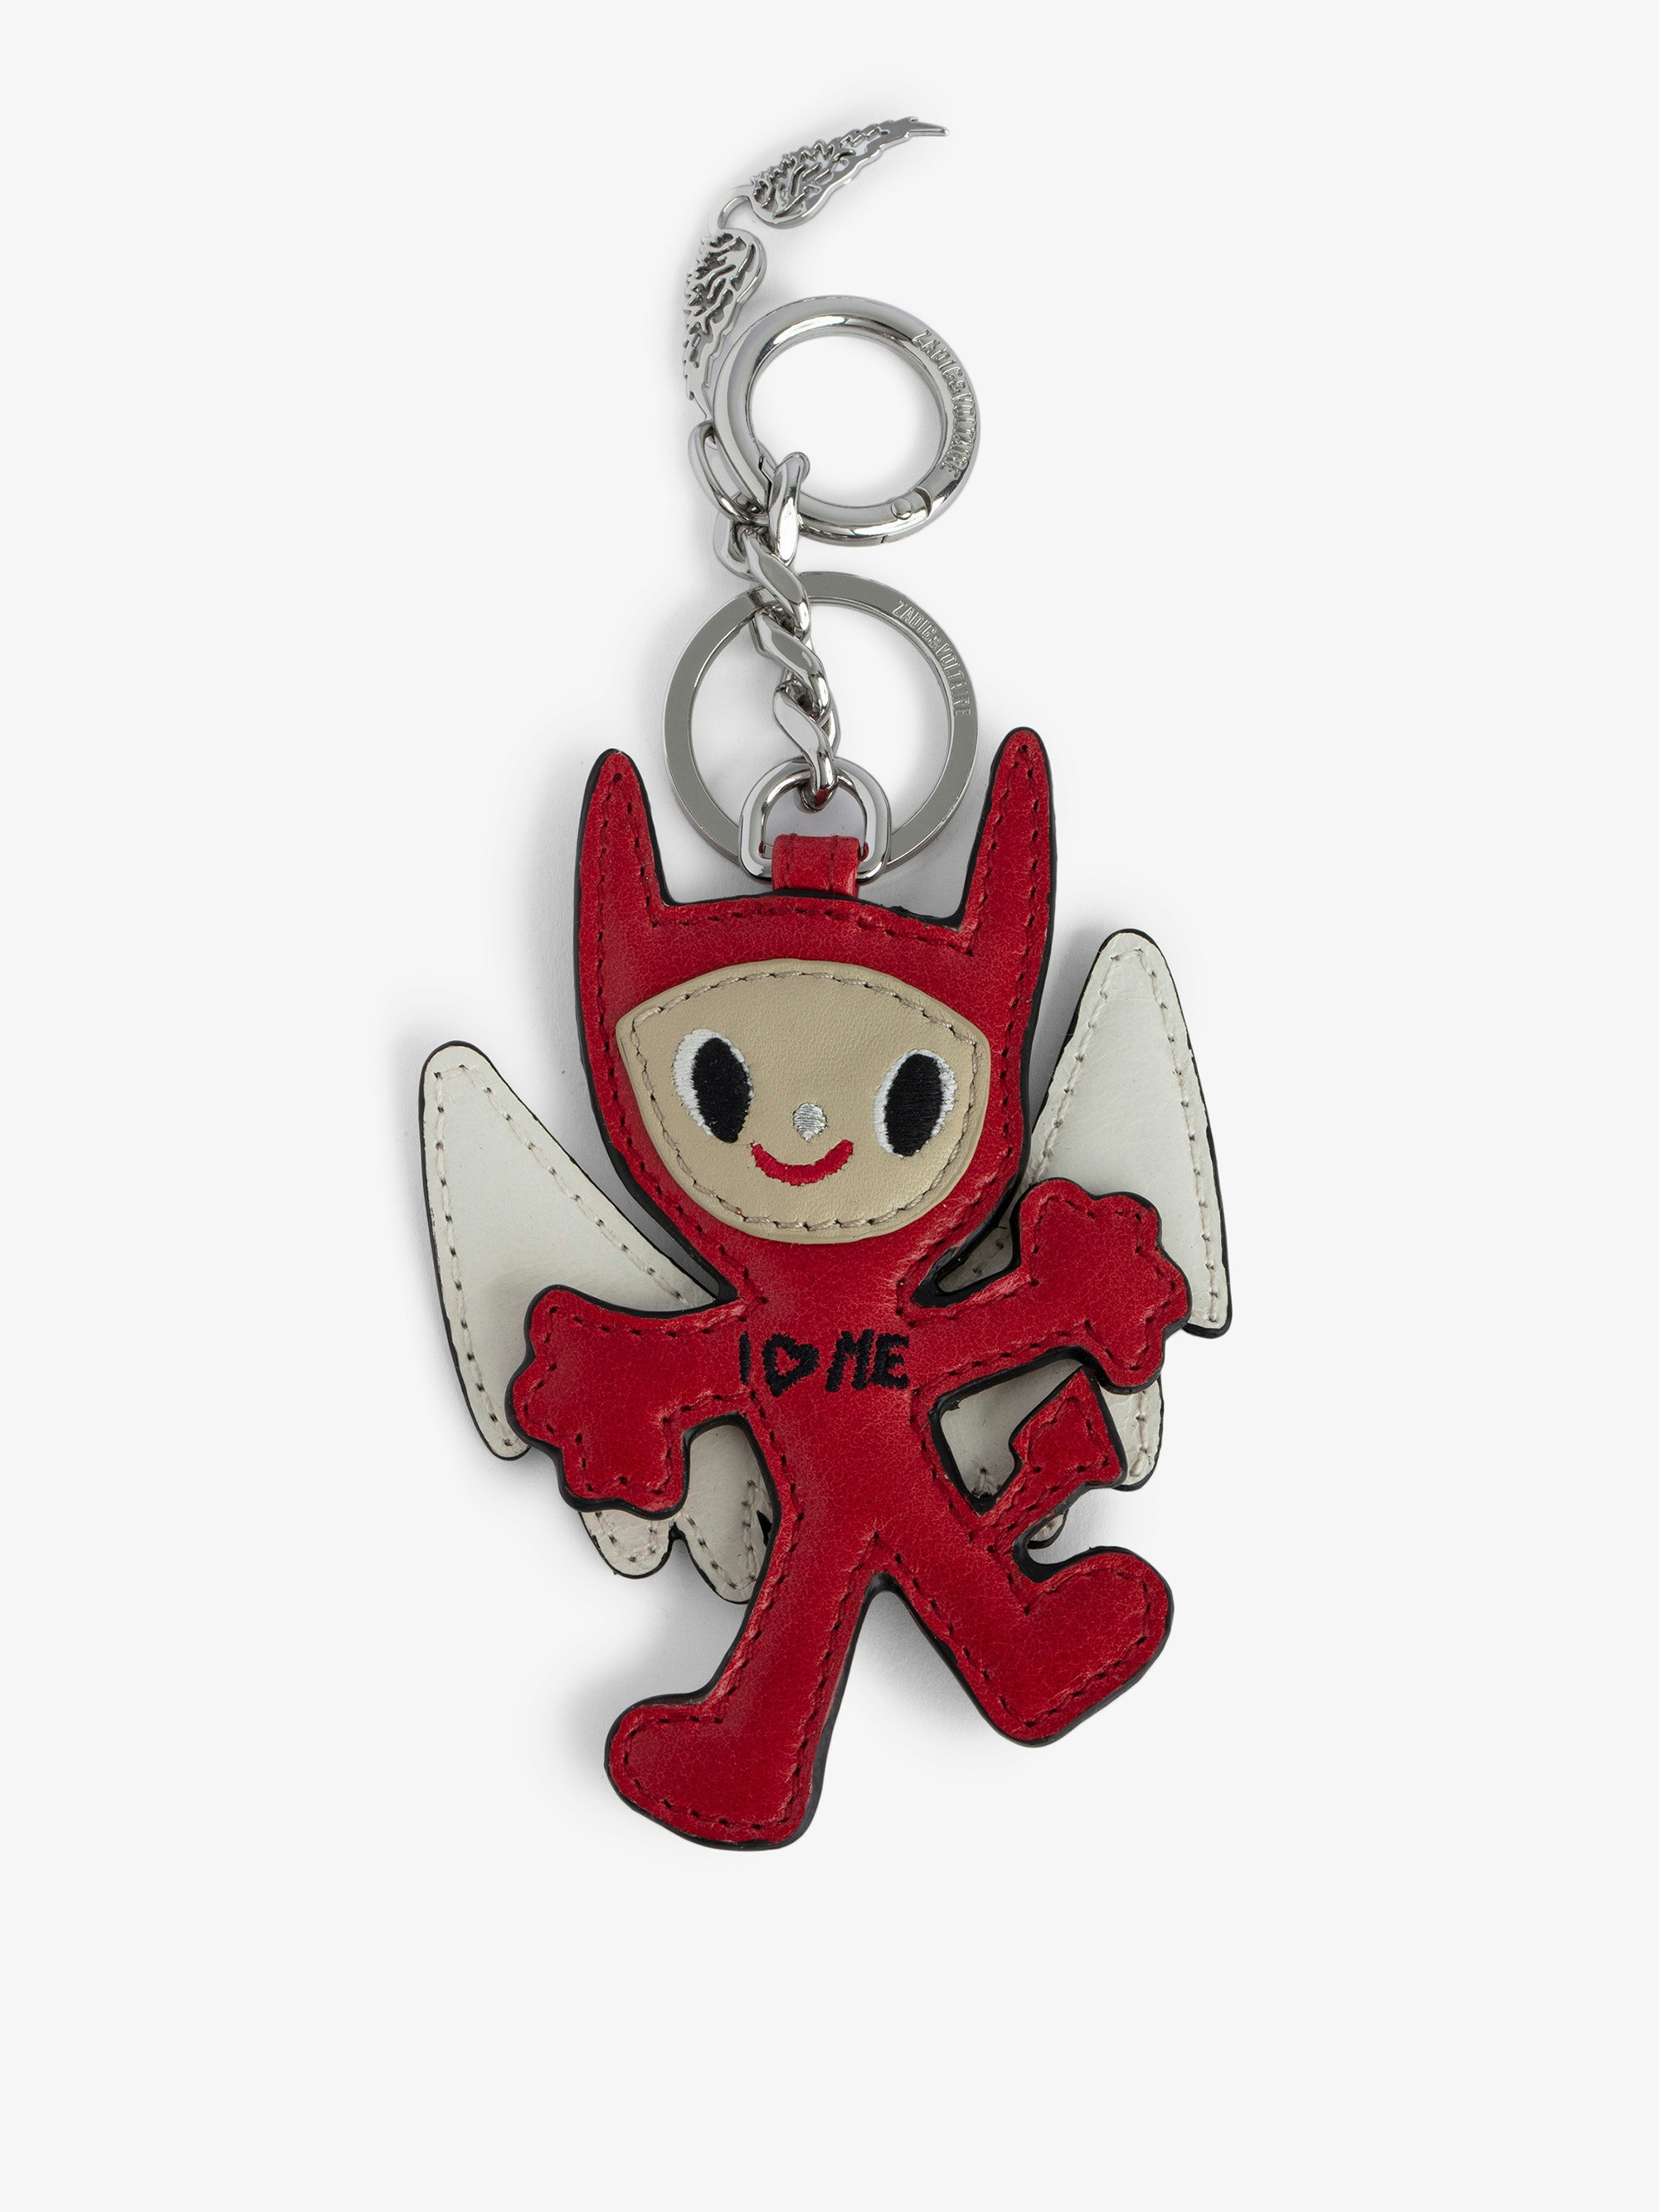 Happy Devil Key Ring - Devil red patent leather key ring.